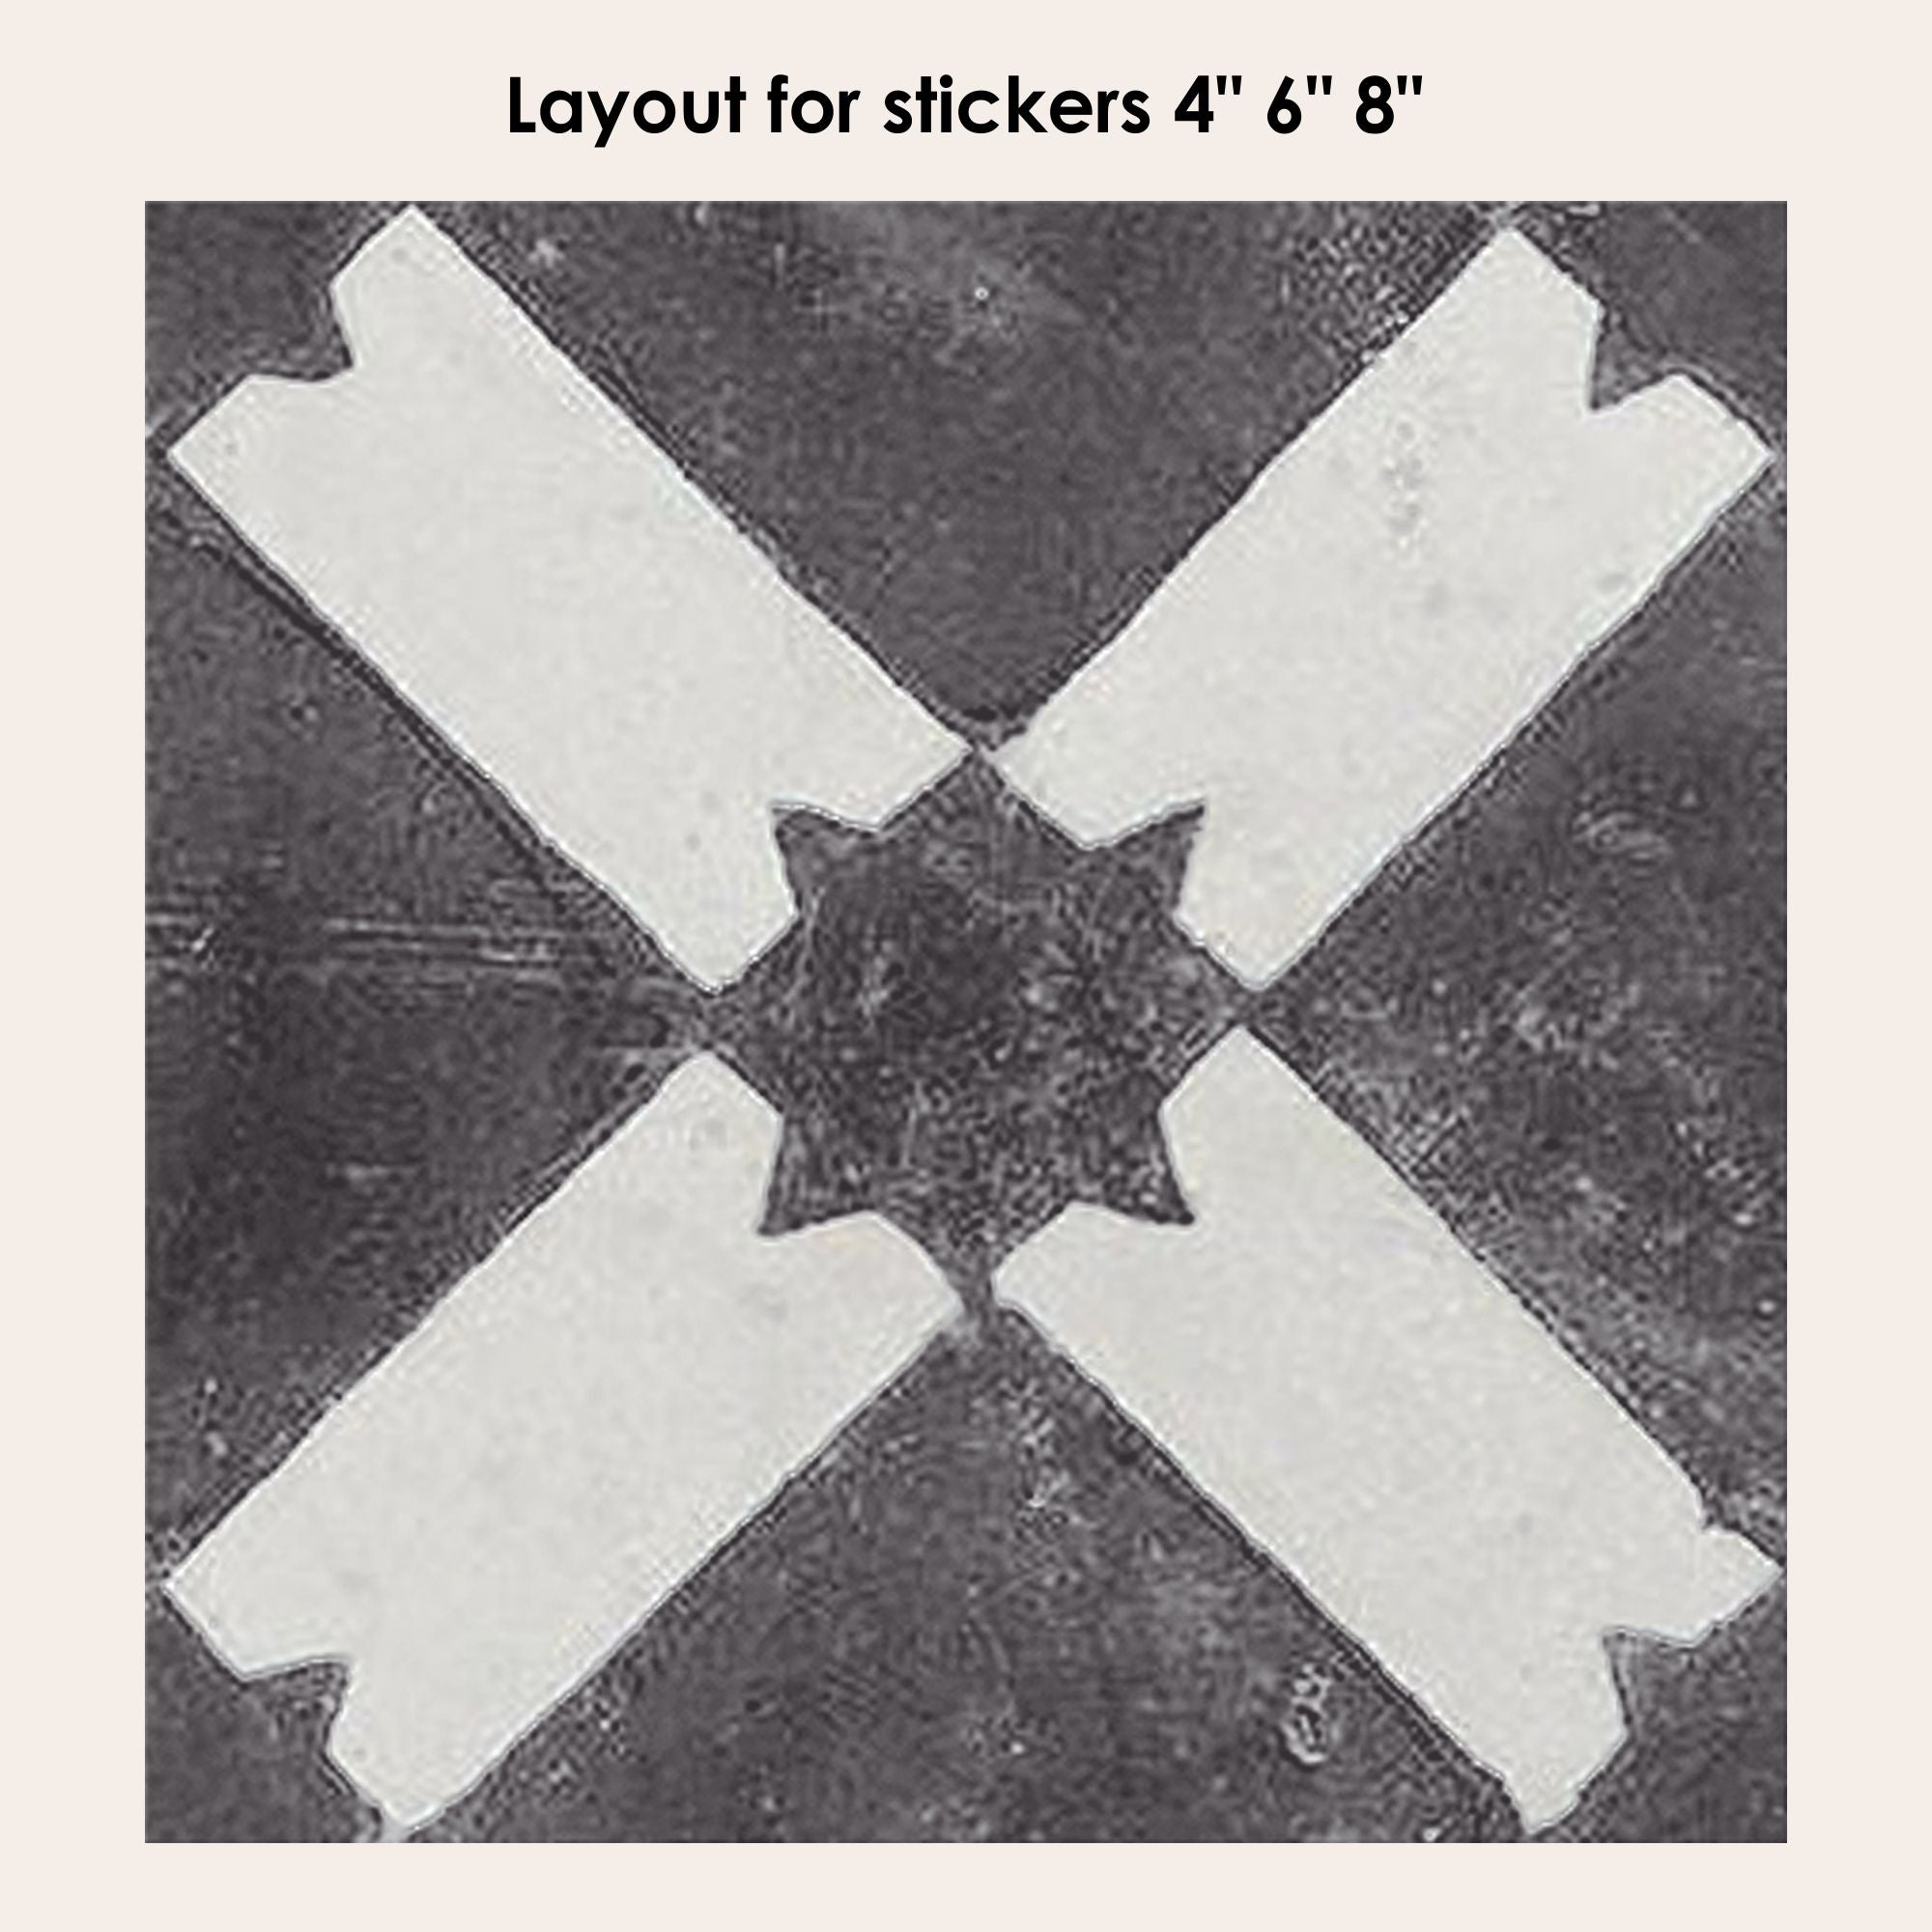 Riad in Black Vinyl Tile Sticker